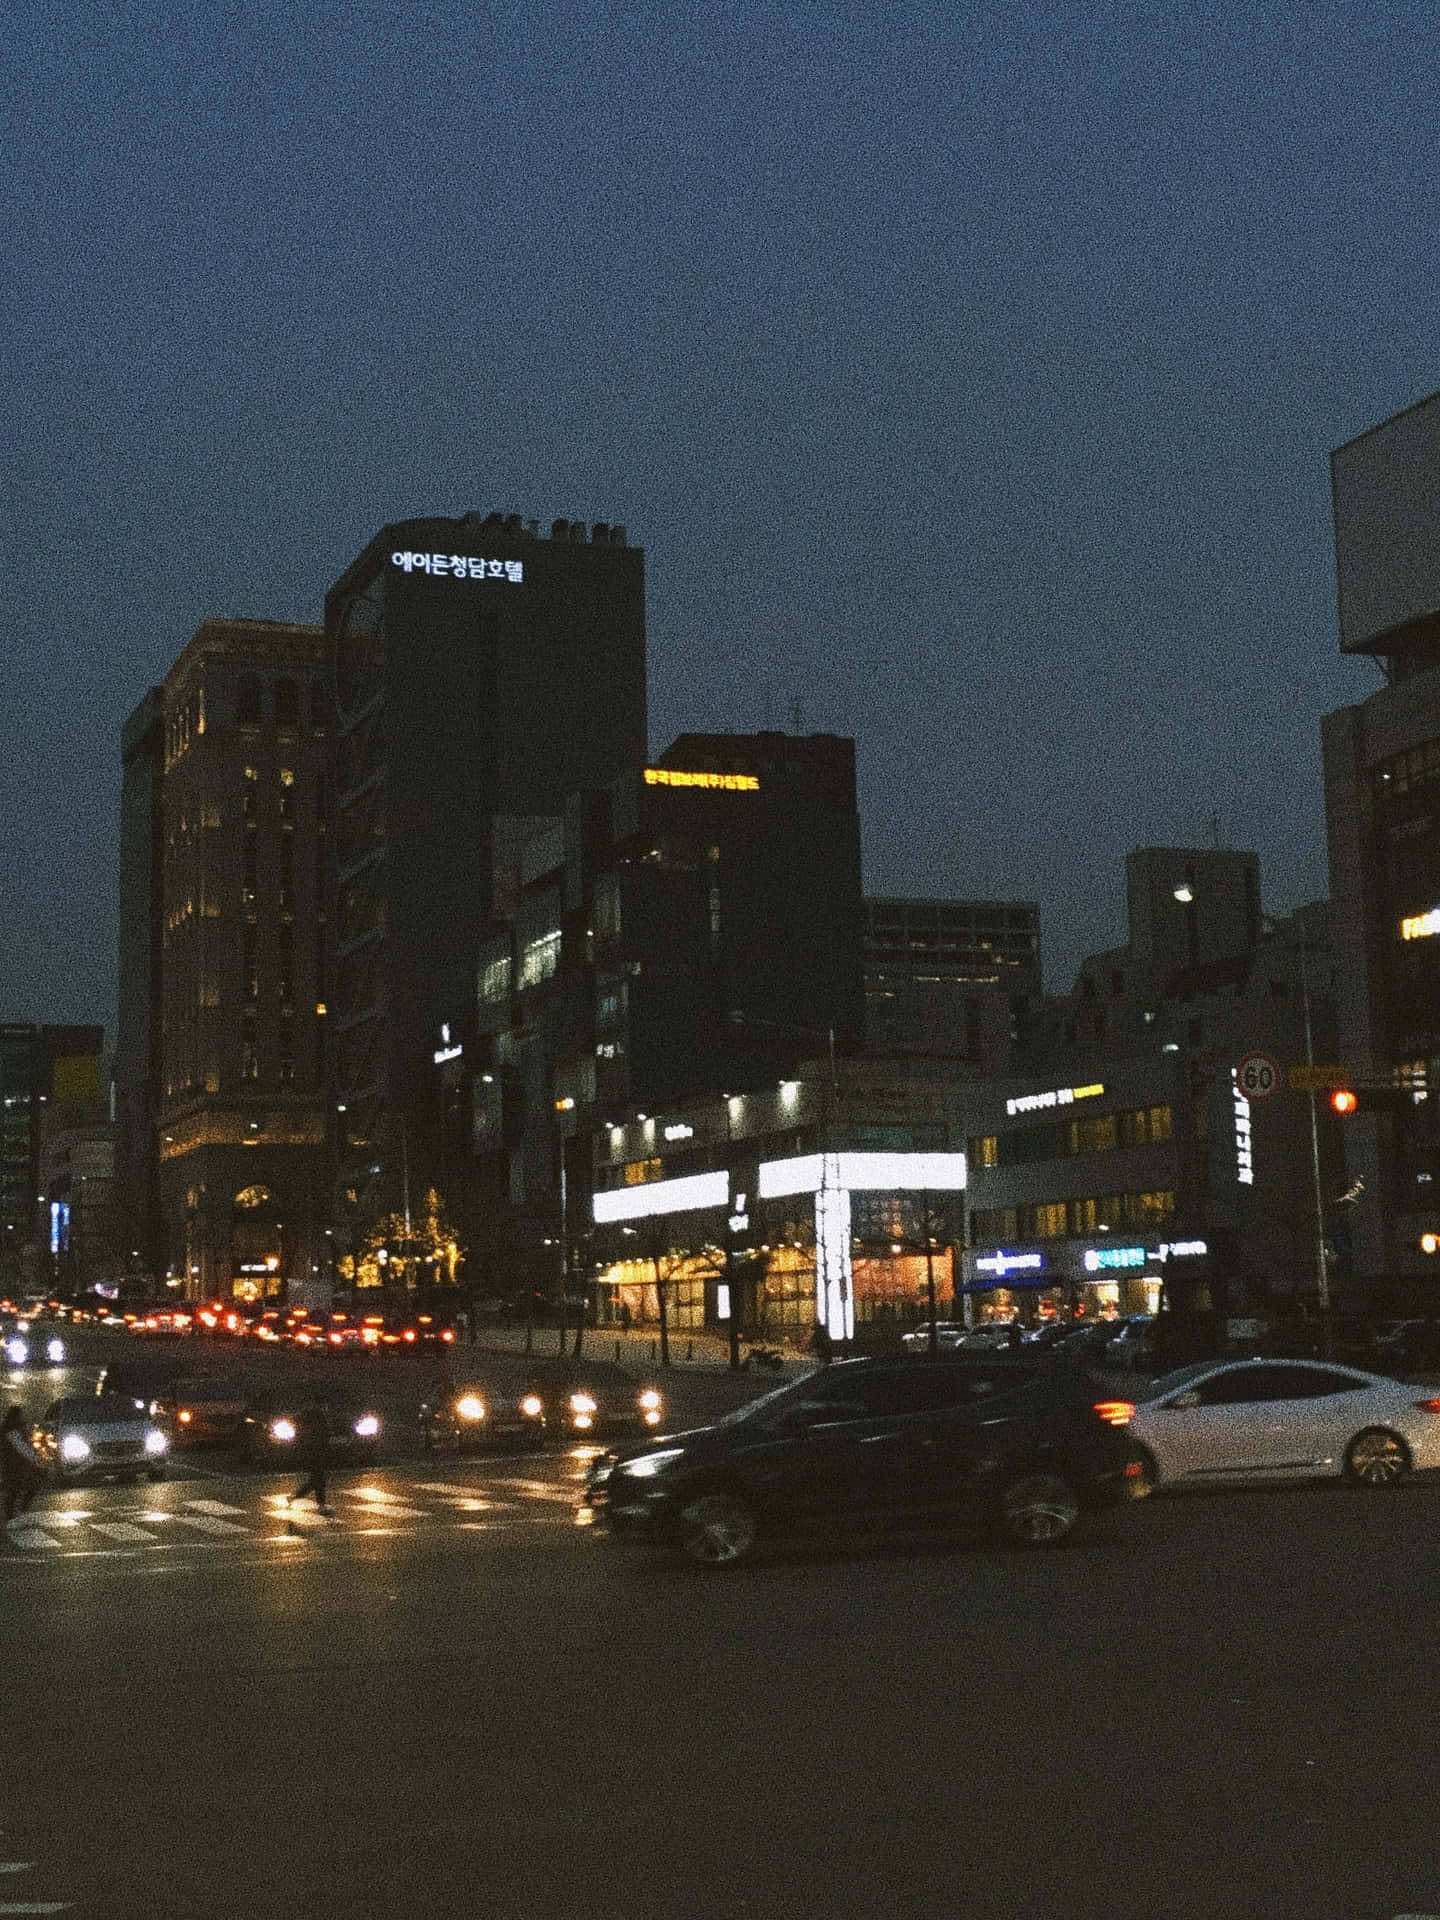 Dark Aesthetic Night City Road Picture